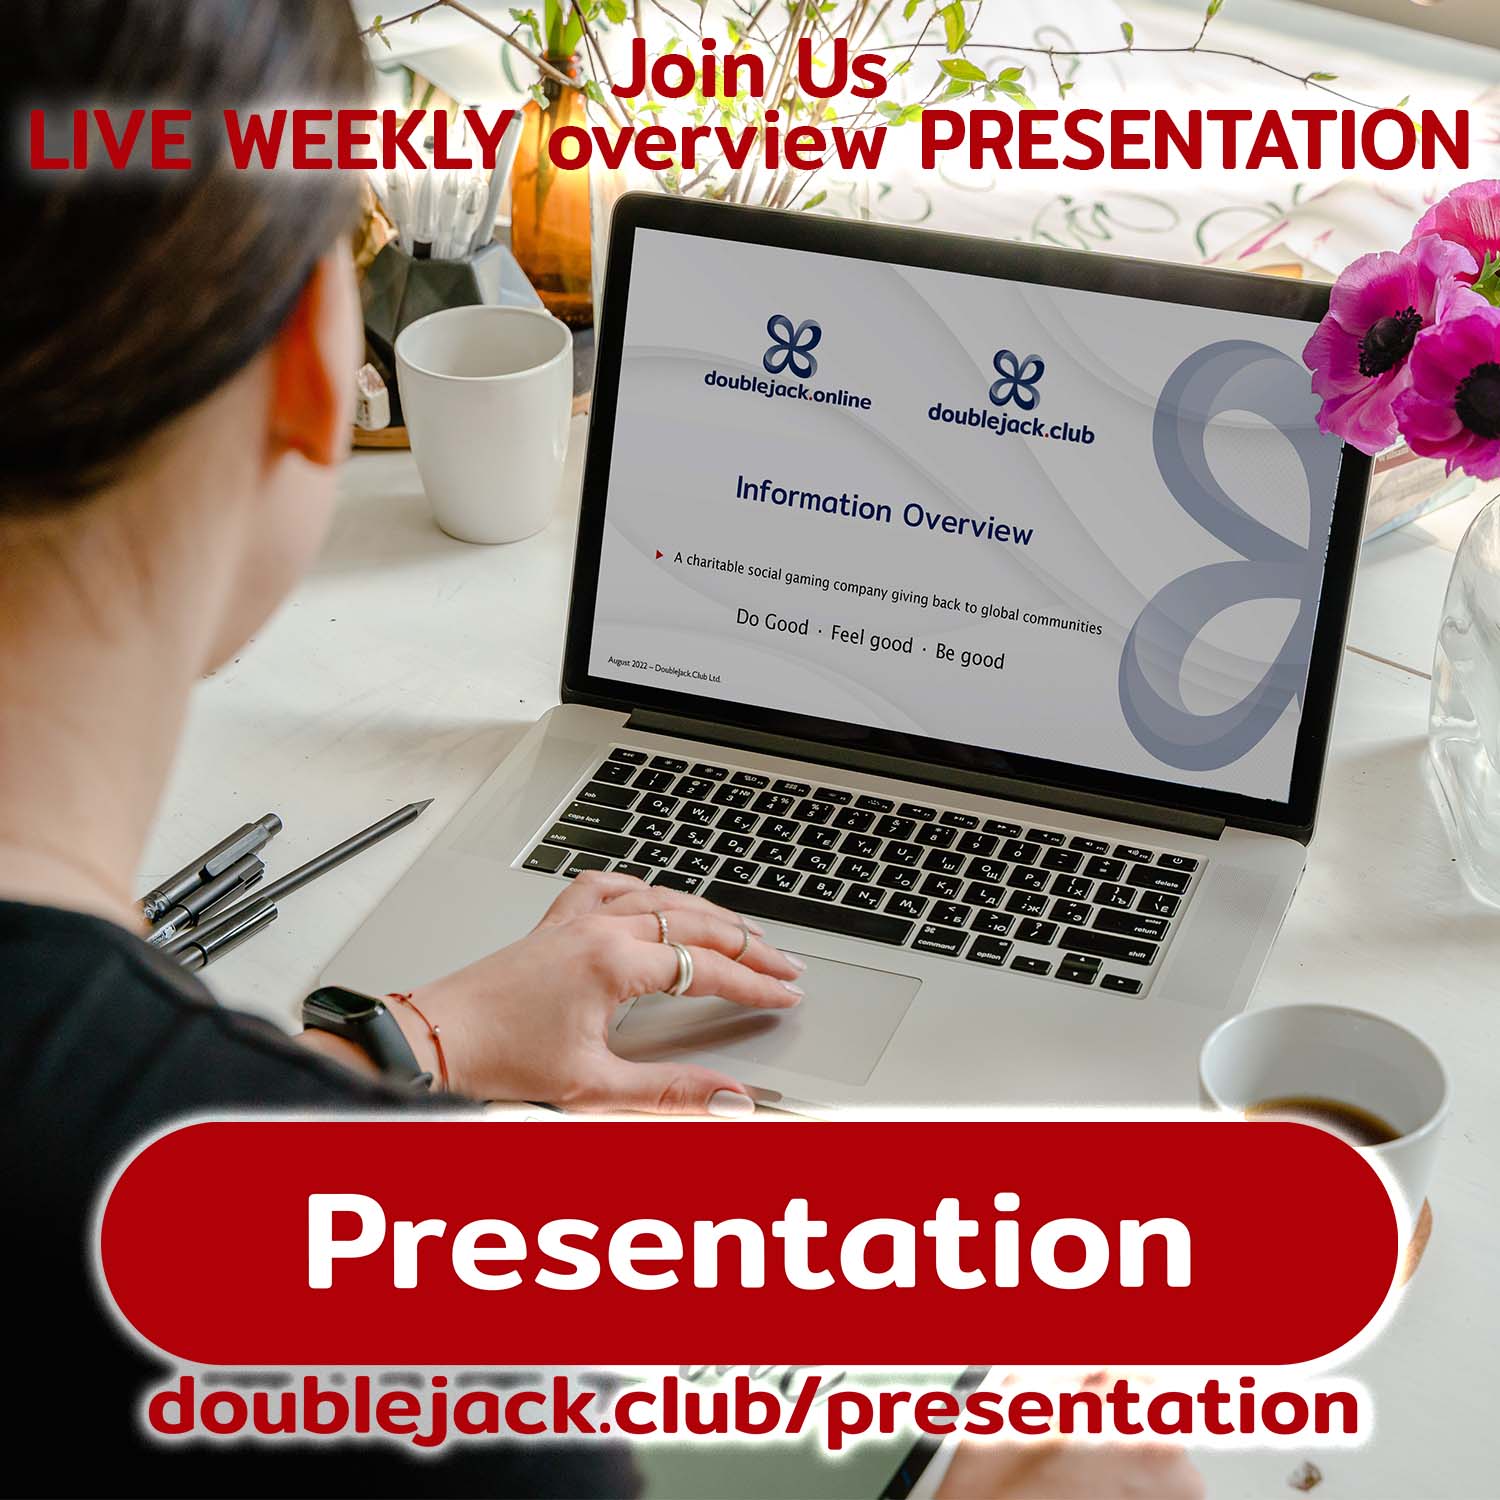 doublejack.online and doublejack.club life online presentation